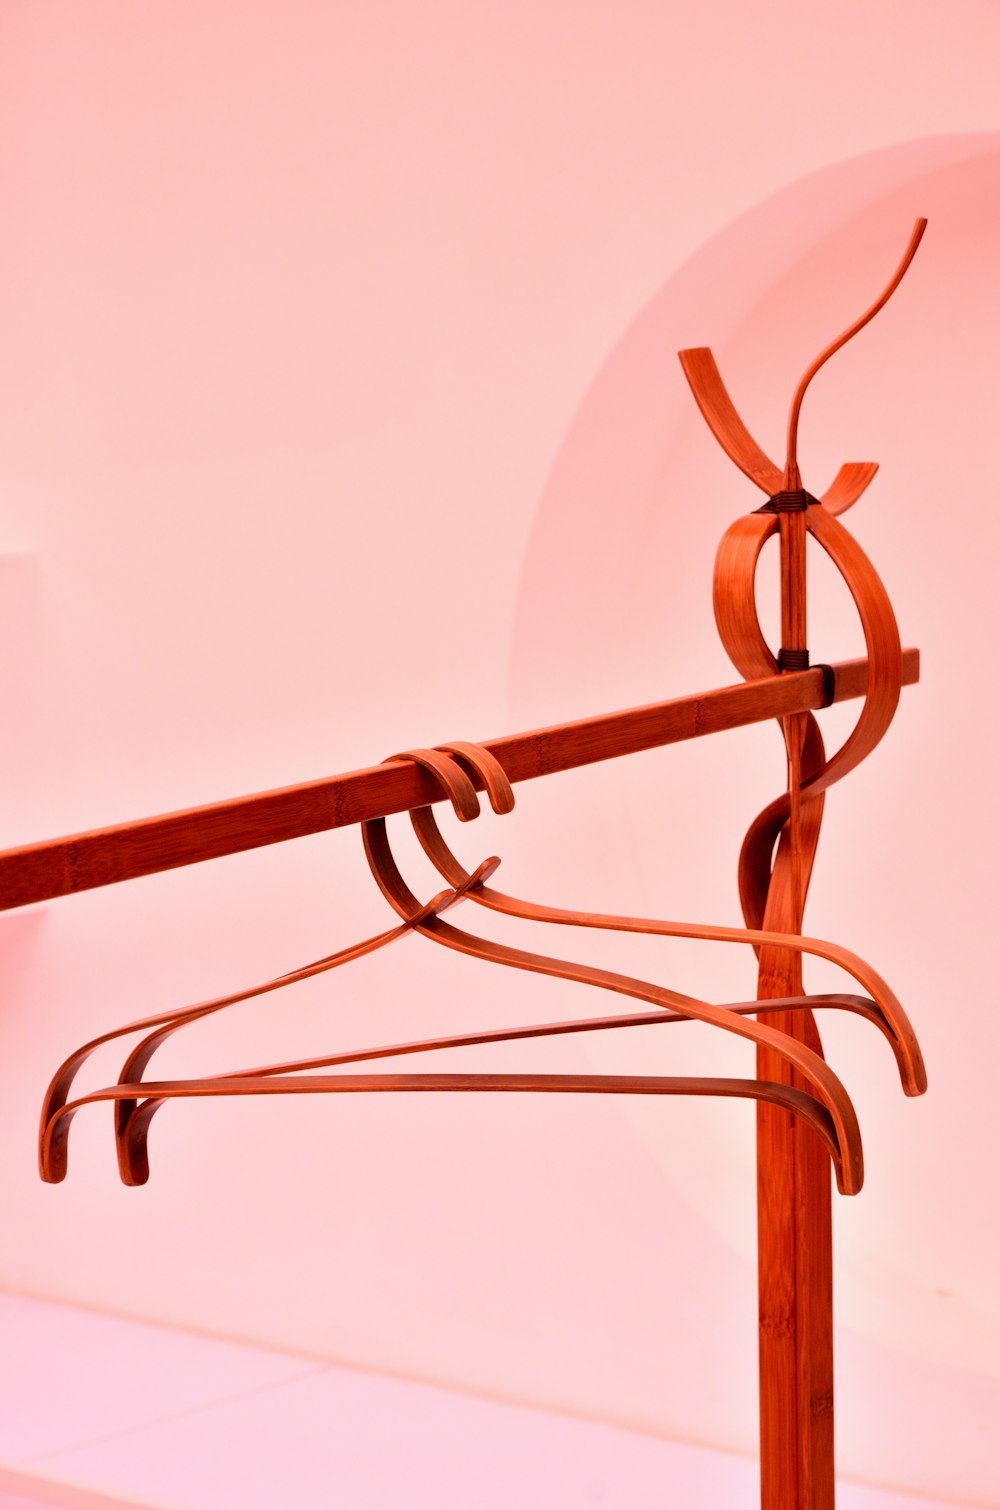 Orange Hangers - Free Stock Photo by MegaSupremE7 on